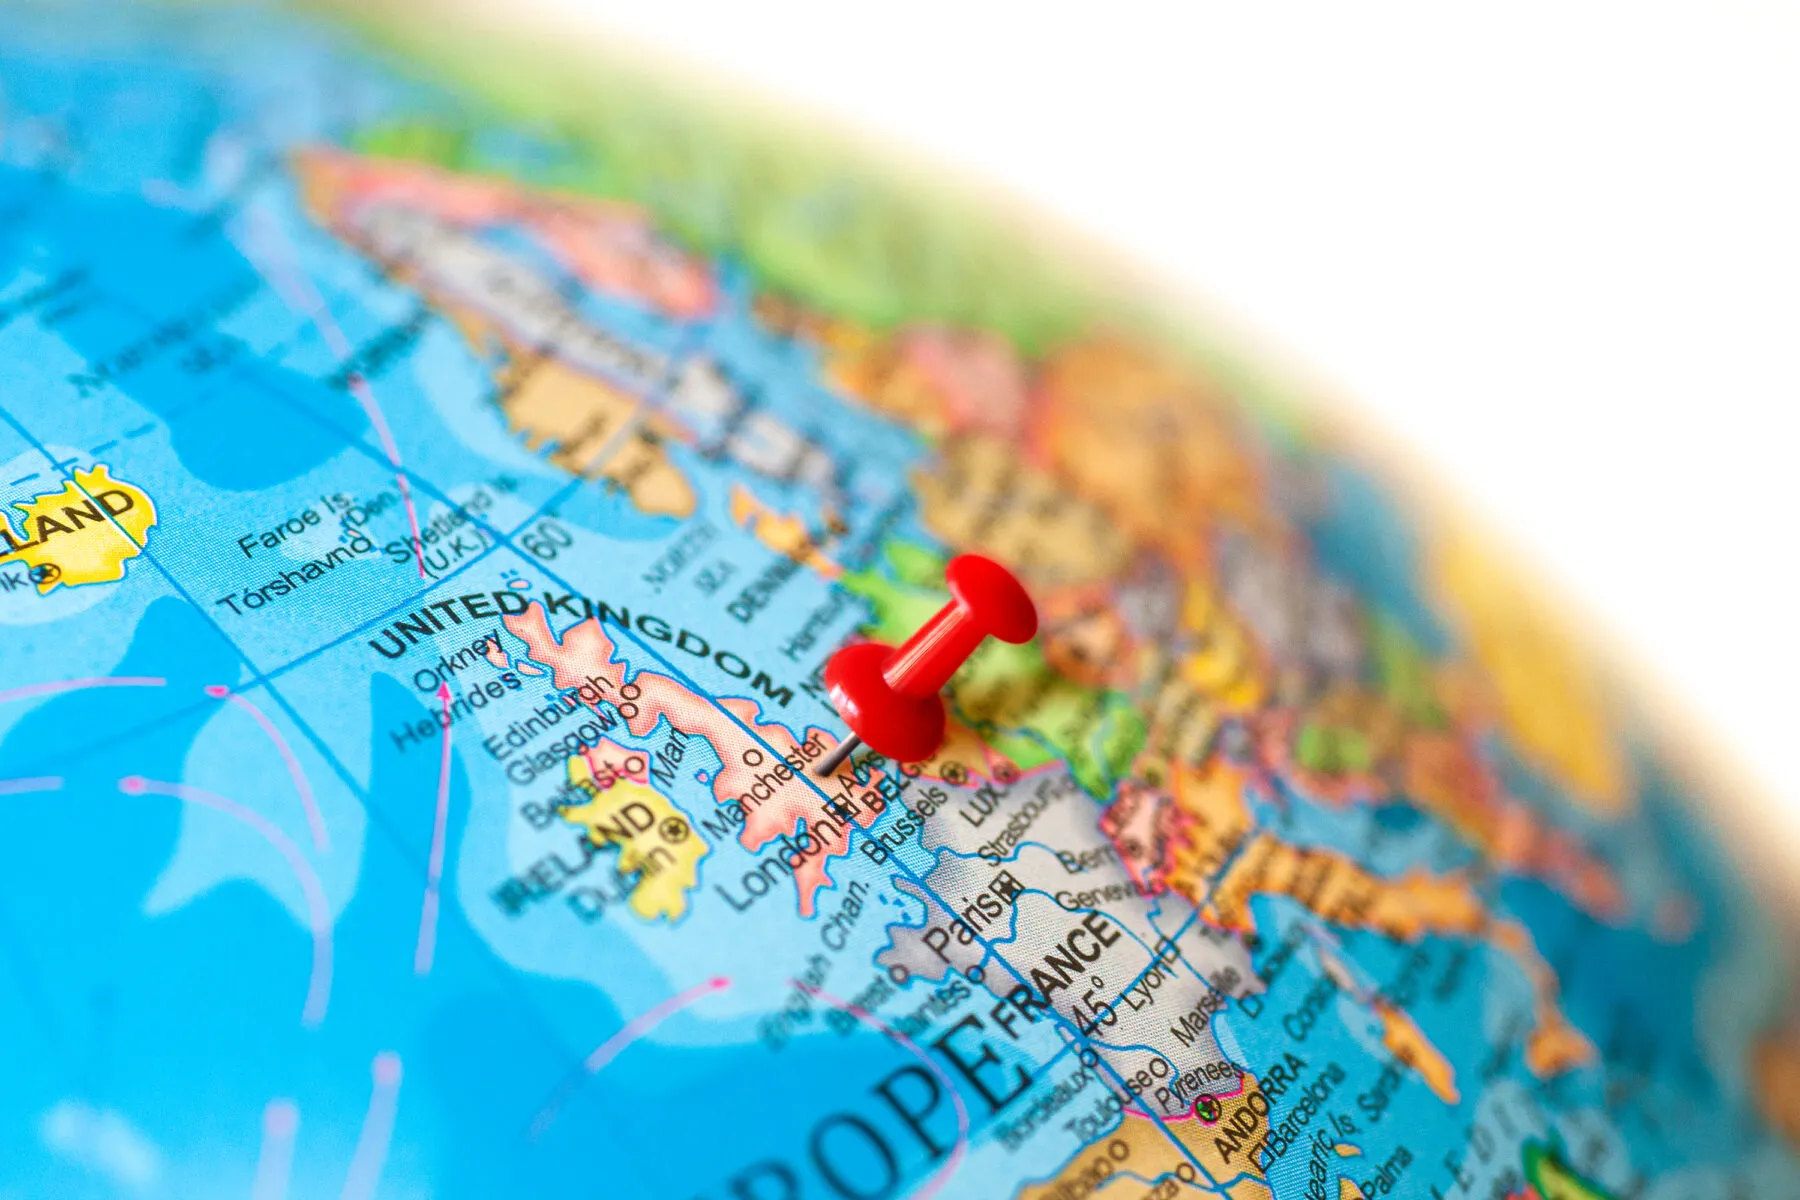 A close up of the UK on a globe, with a red pin marking its location